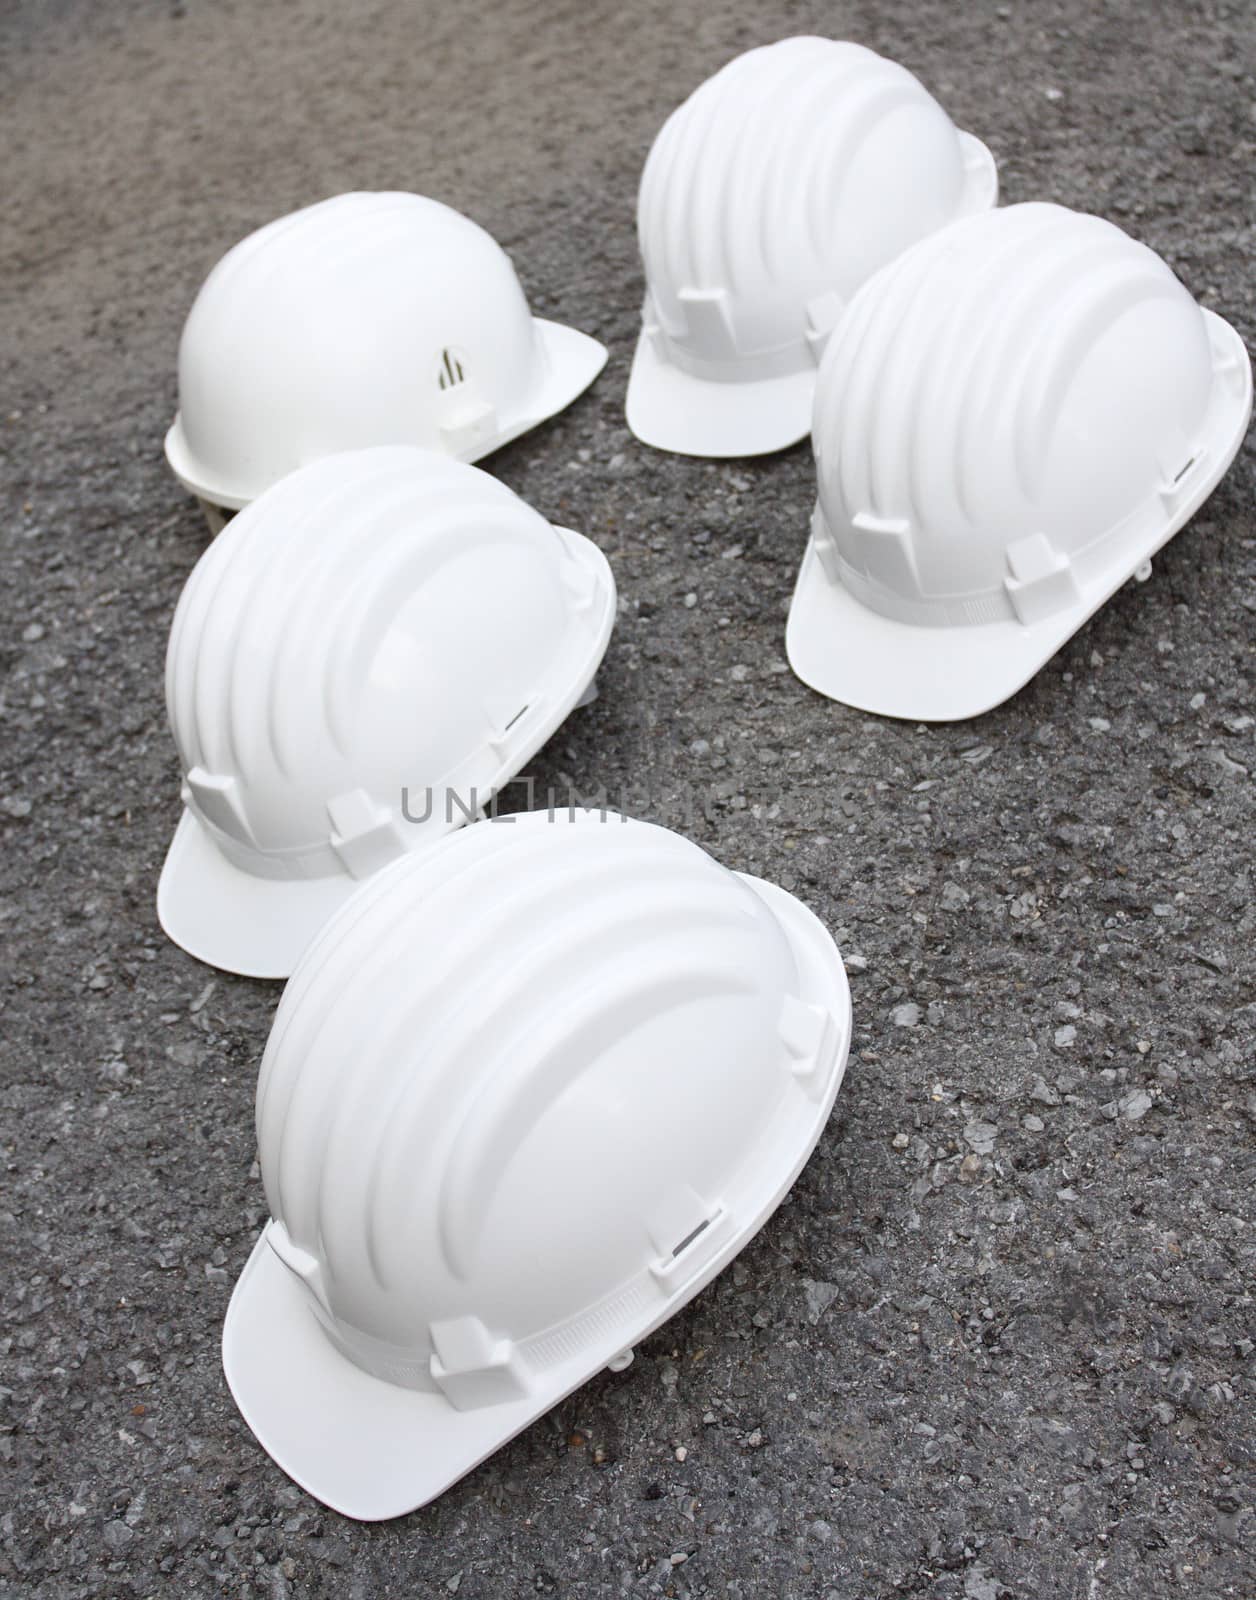 white helmets by alexkosev